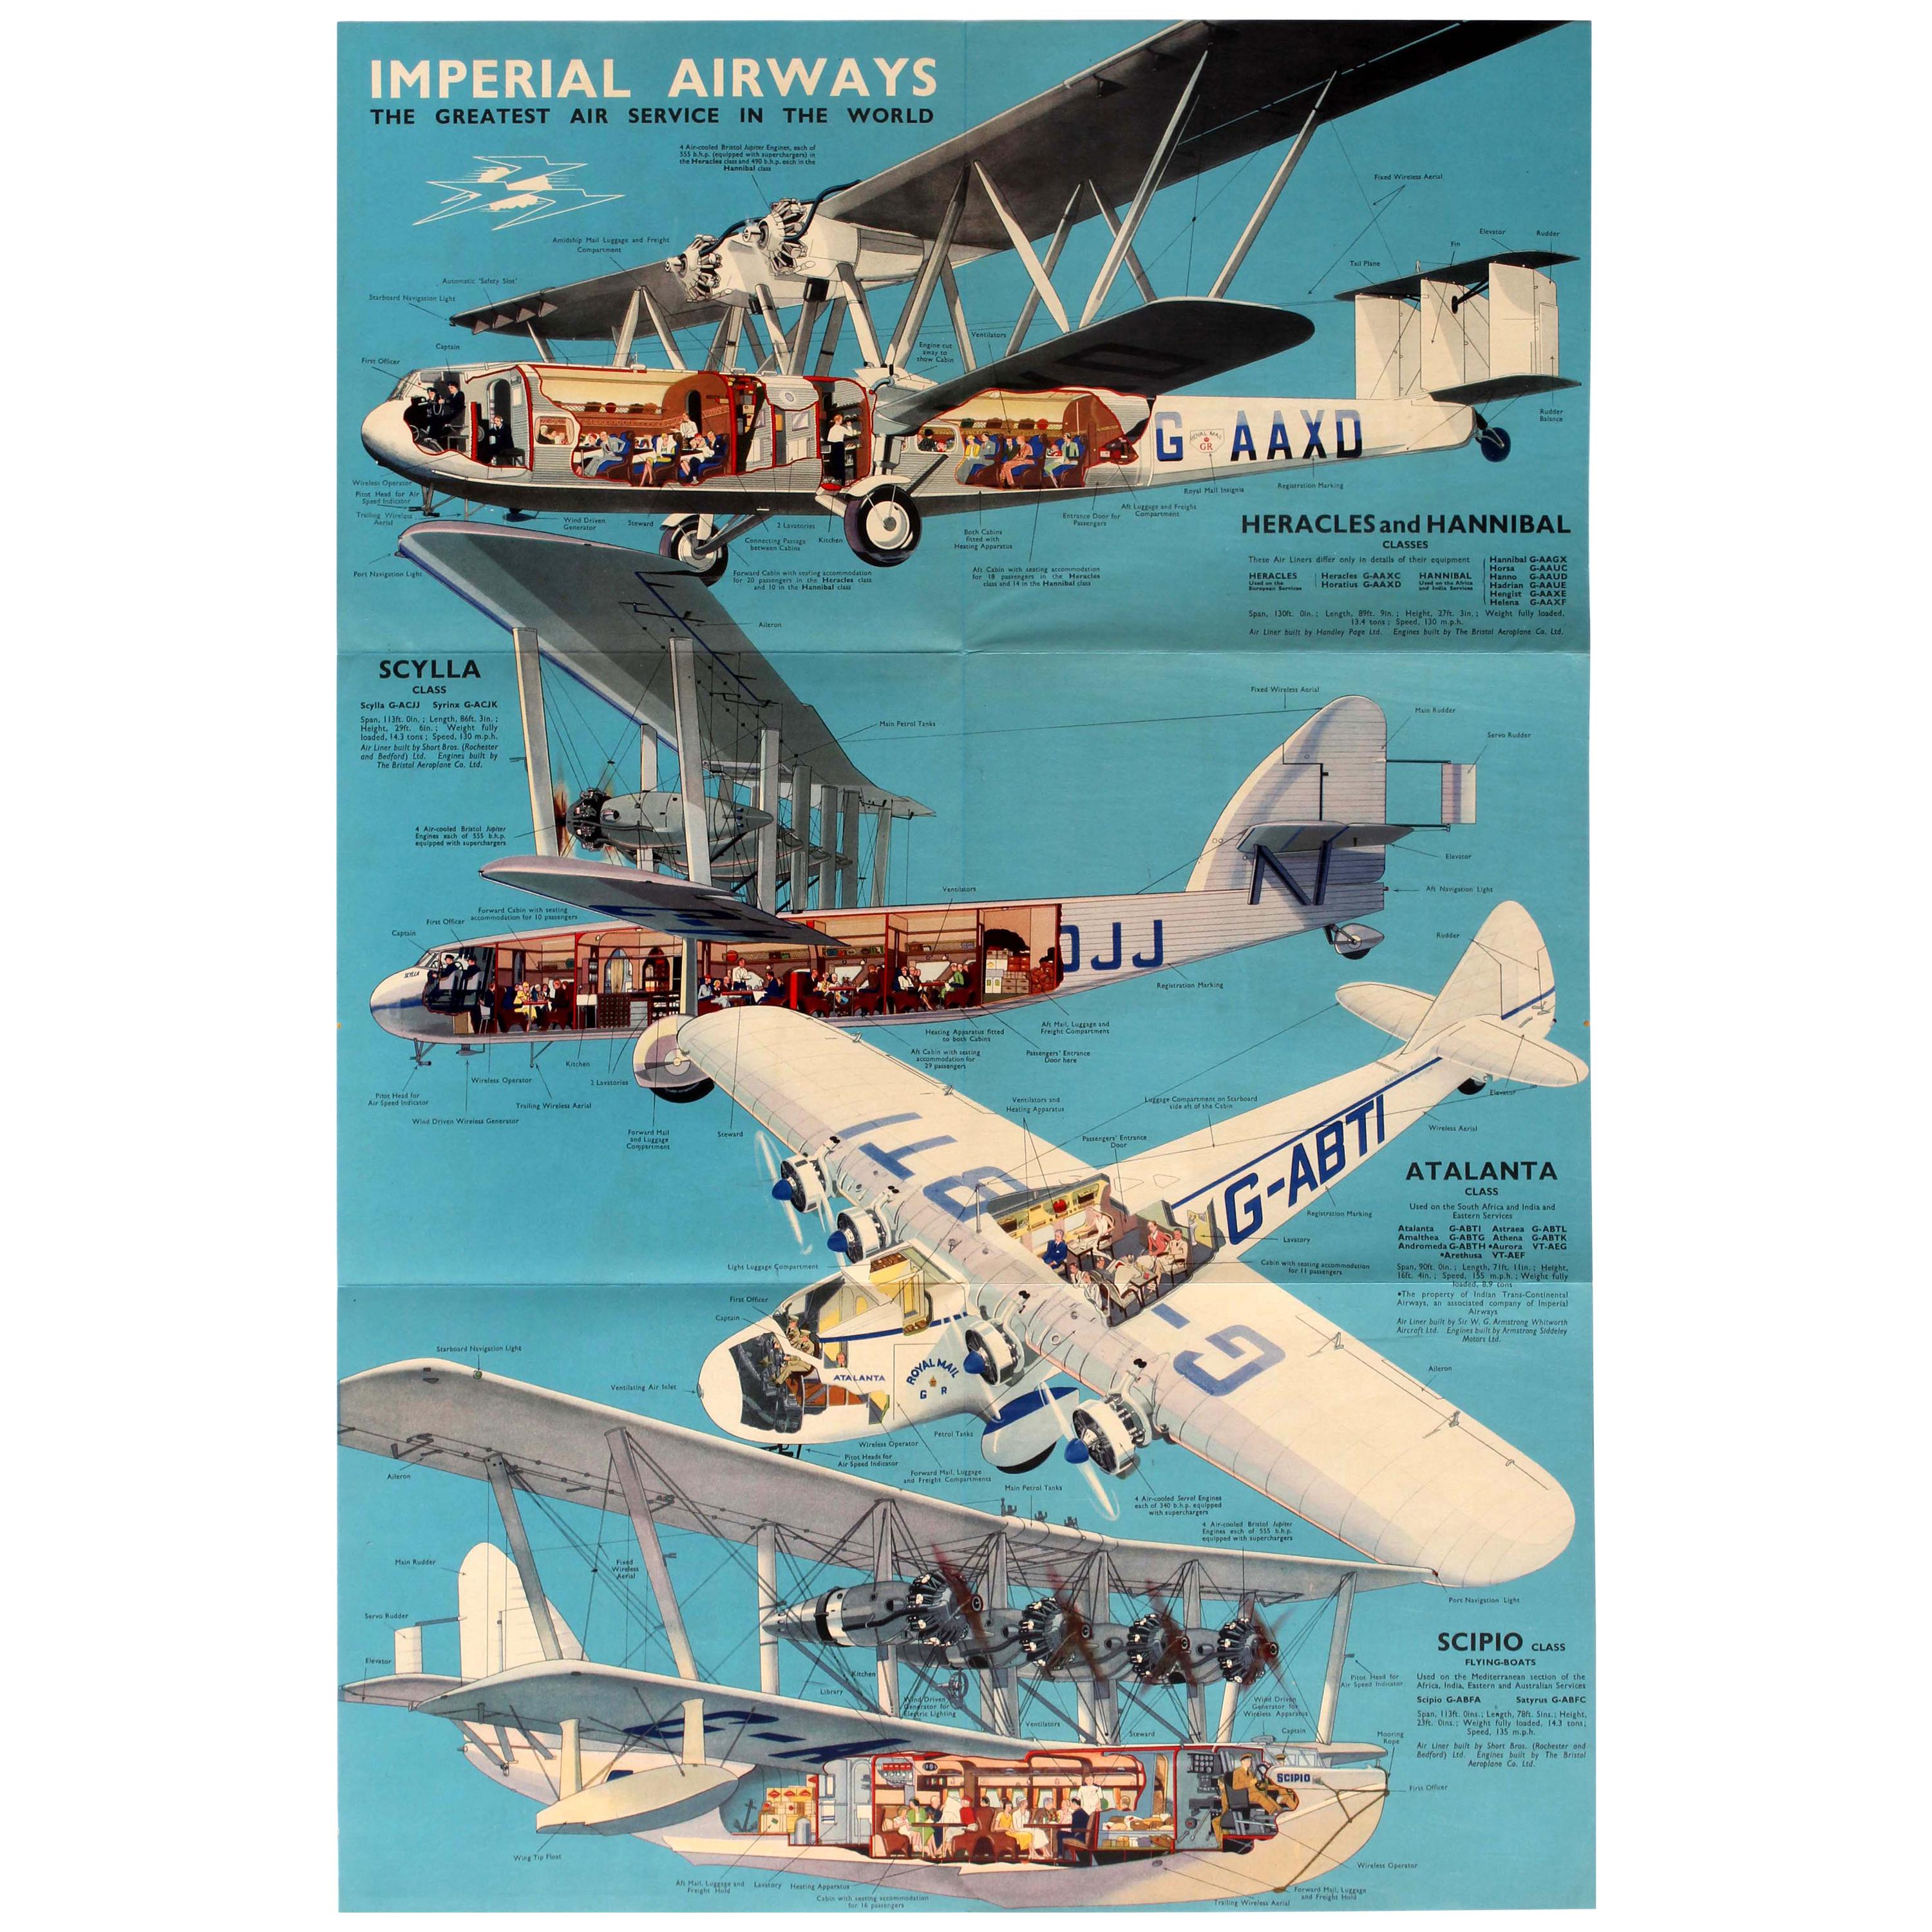 Original Vintage Imperial Airways Travel Brochure Poster Flying Boat Land Planes